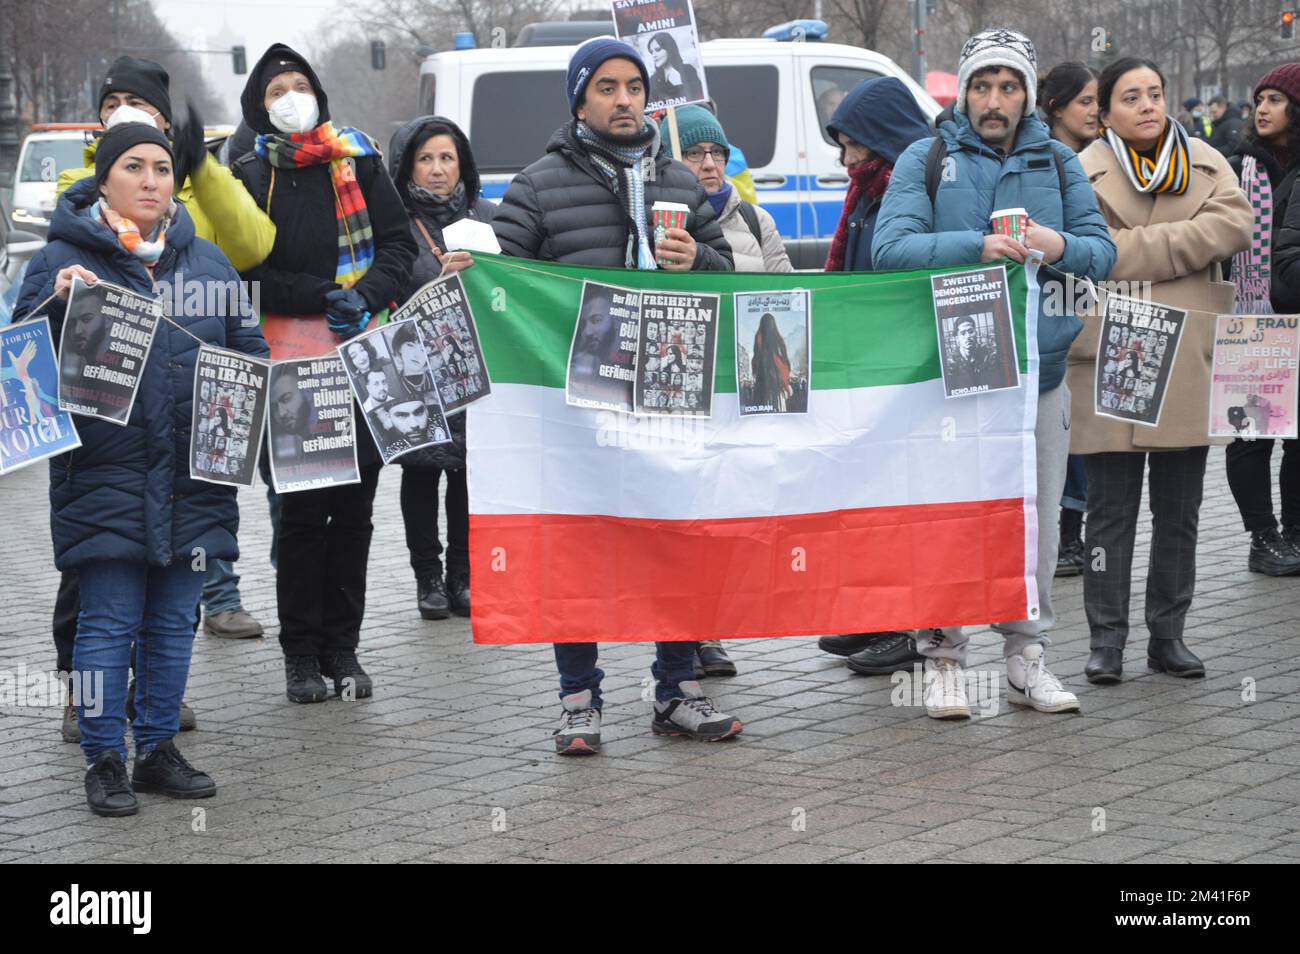 Berlin, Germany - December 17, 2022 - Demonstration at Pariser Platz against executions and regime in Iran. (Photo by Markku Rainer Peltonen) Stock Photo